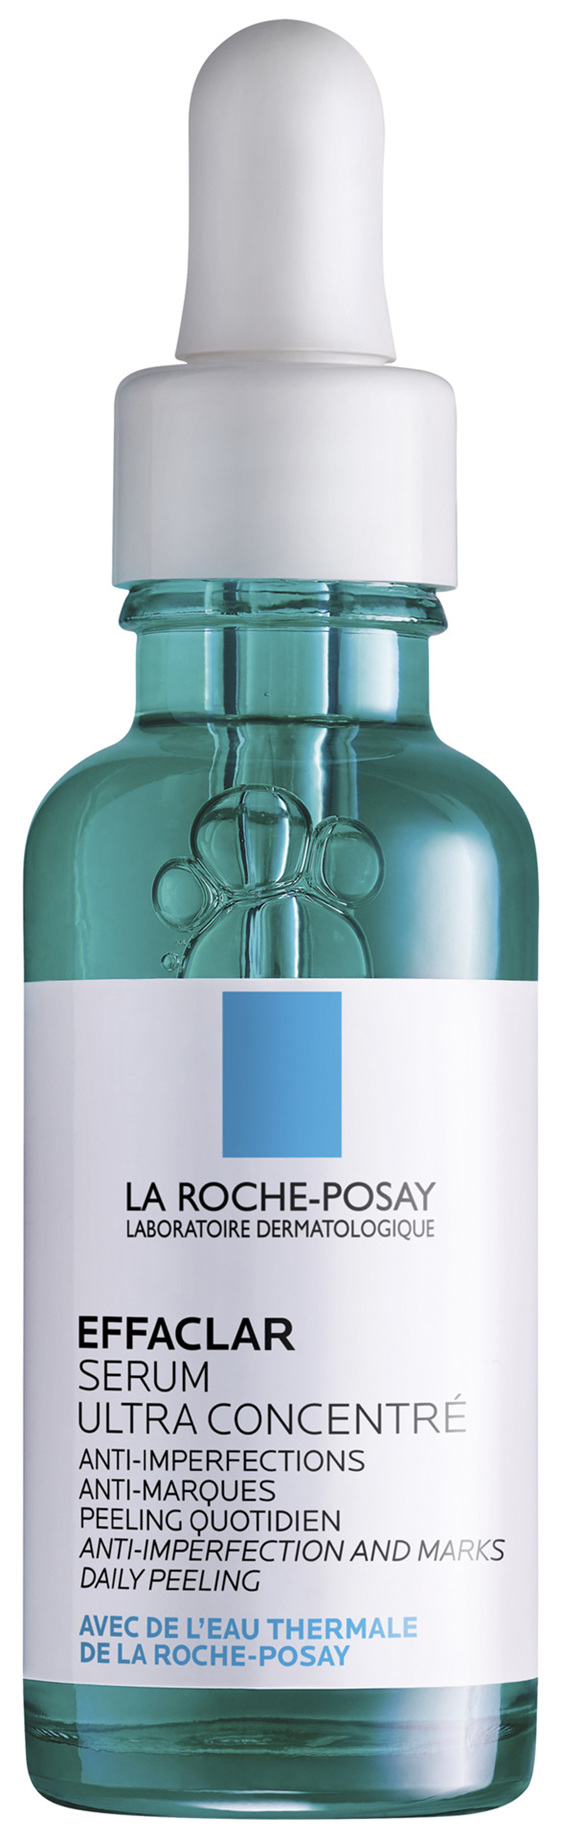 La Roche-Posay Effaclar Serum 30mL